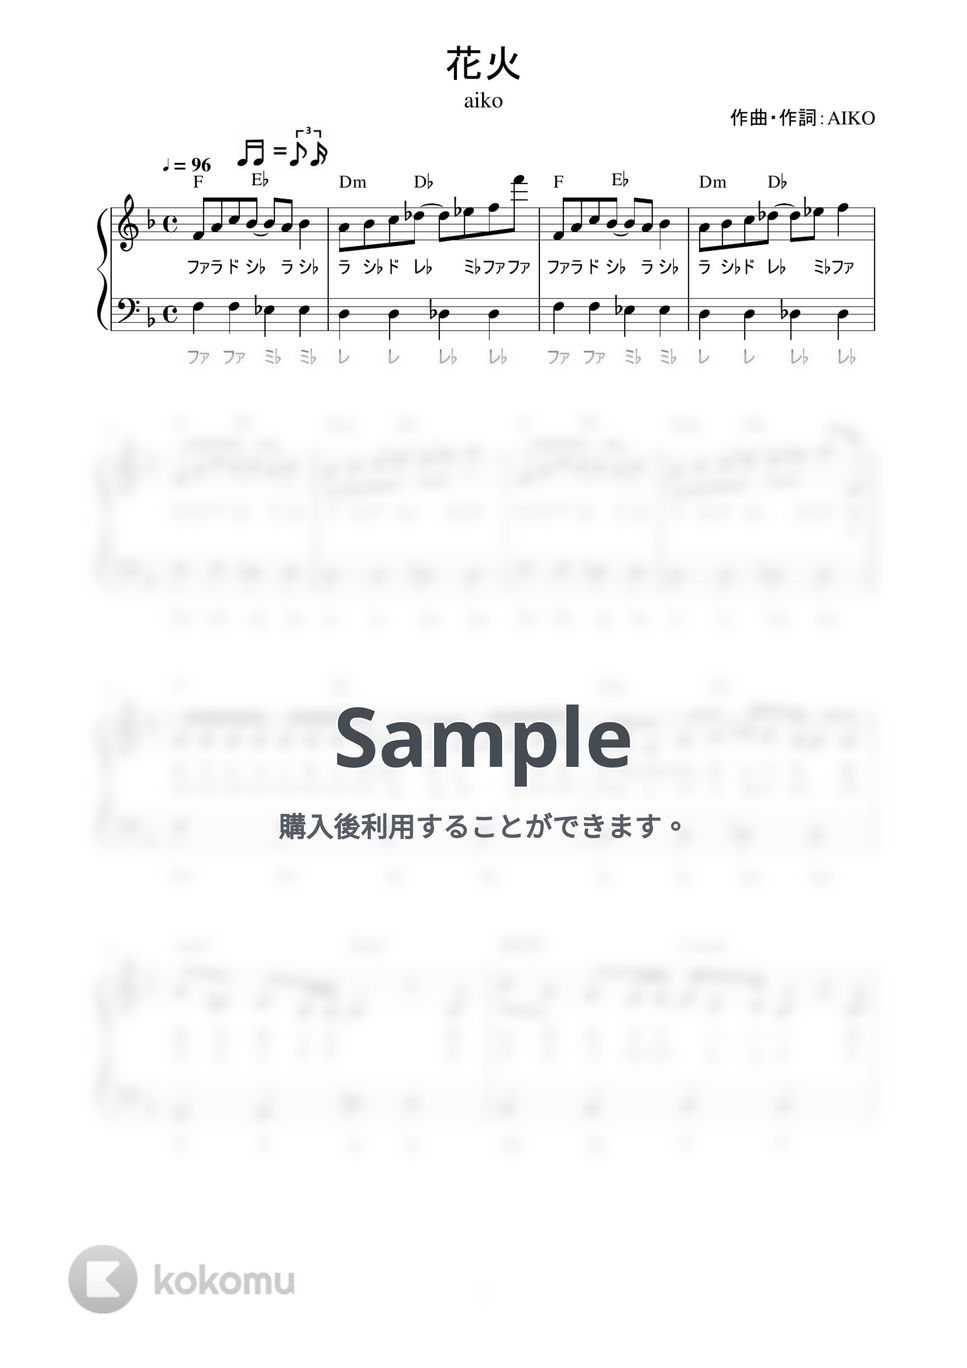 aiko - 花火 (かんたん / 歌詞付き / ドレミ付き / 初心者) by piano.tokyo